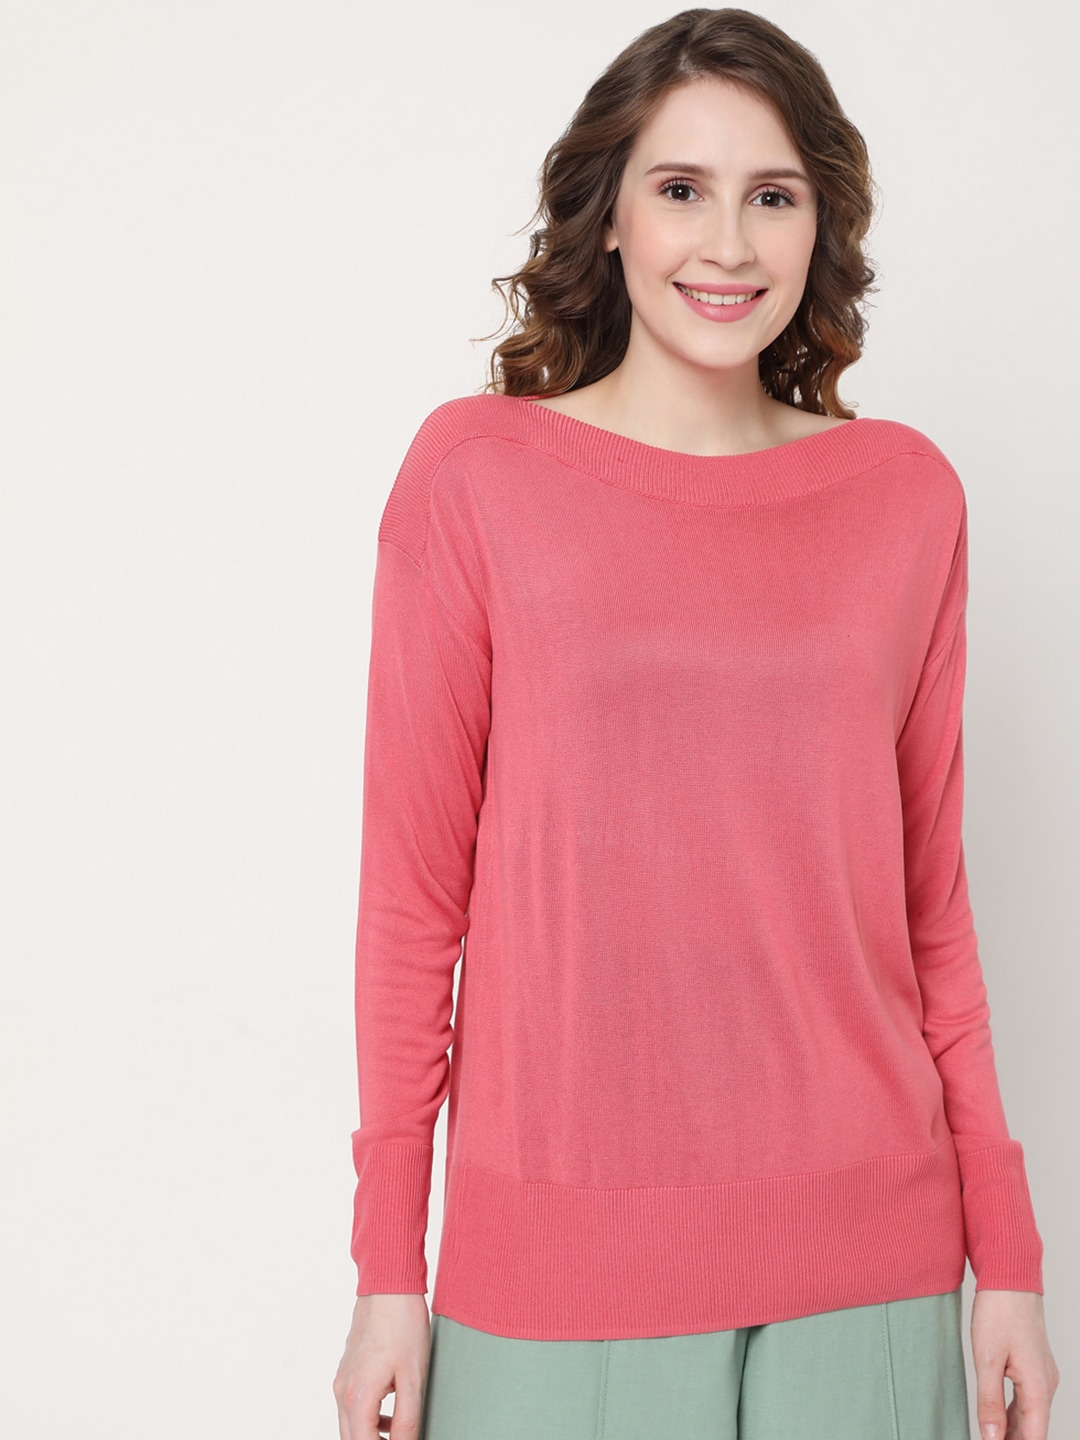 Vero Moda Women Pink Solid Boat Neck Pullover Sweater Price in India